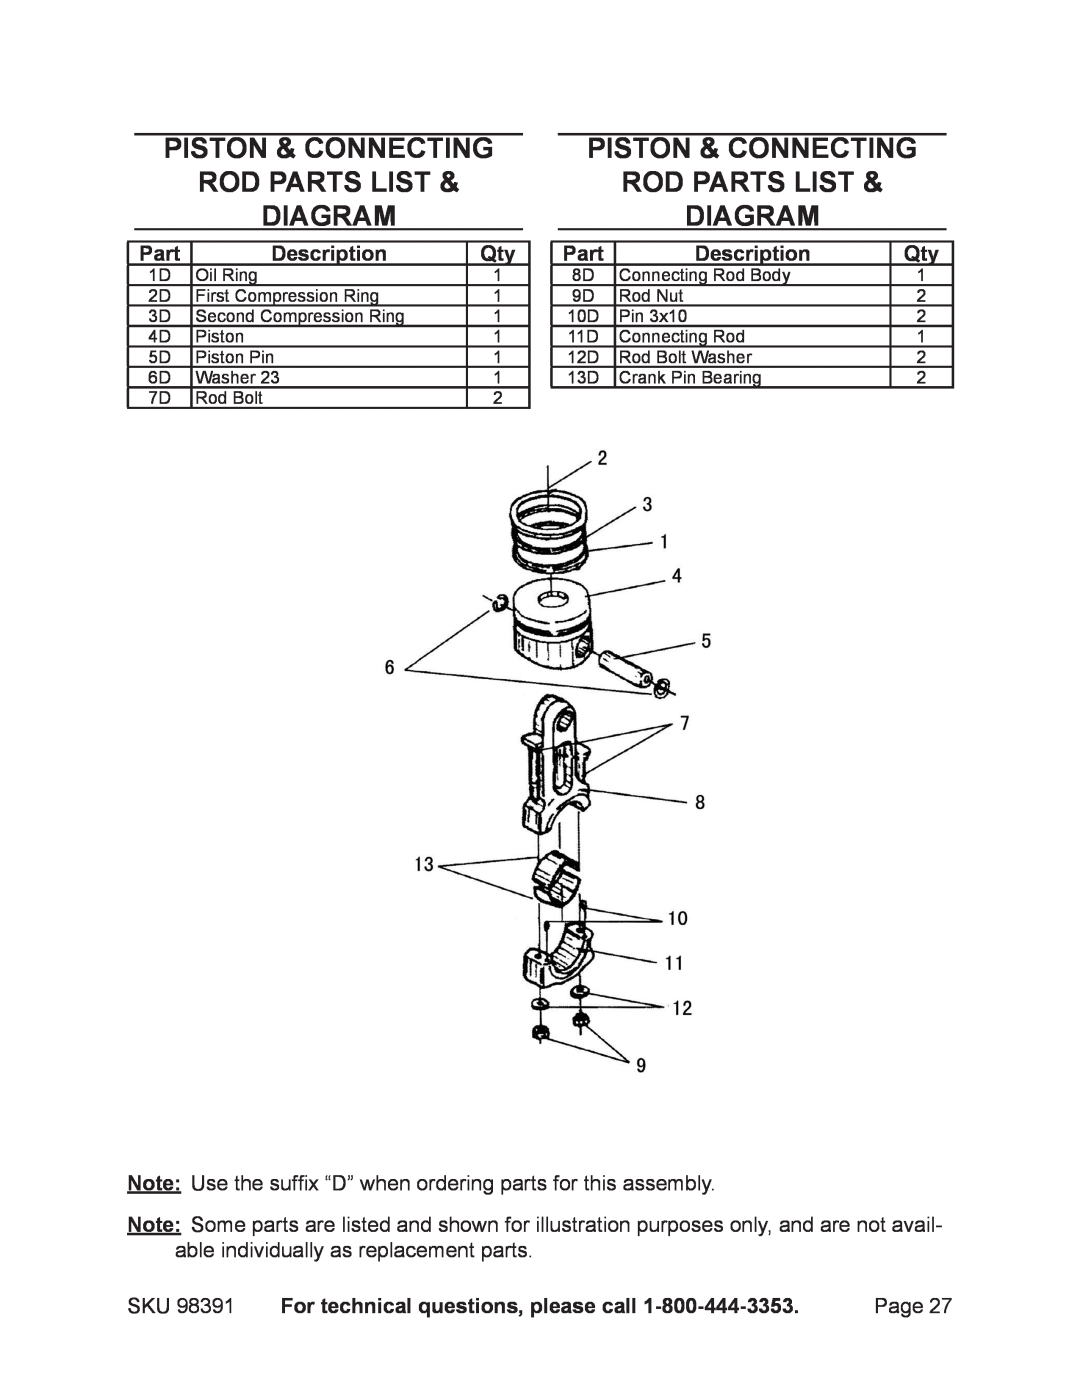 Chicago Electric 98391 Piston & connecting rod PARTS LIST diagram, Part, Description, For technical questions, please call 